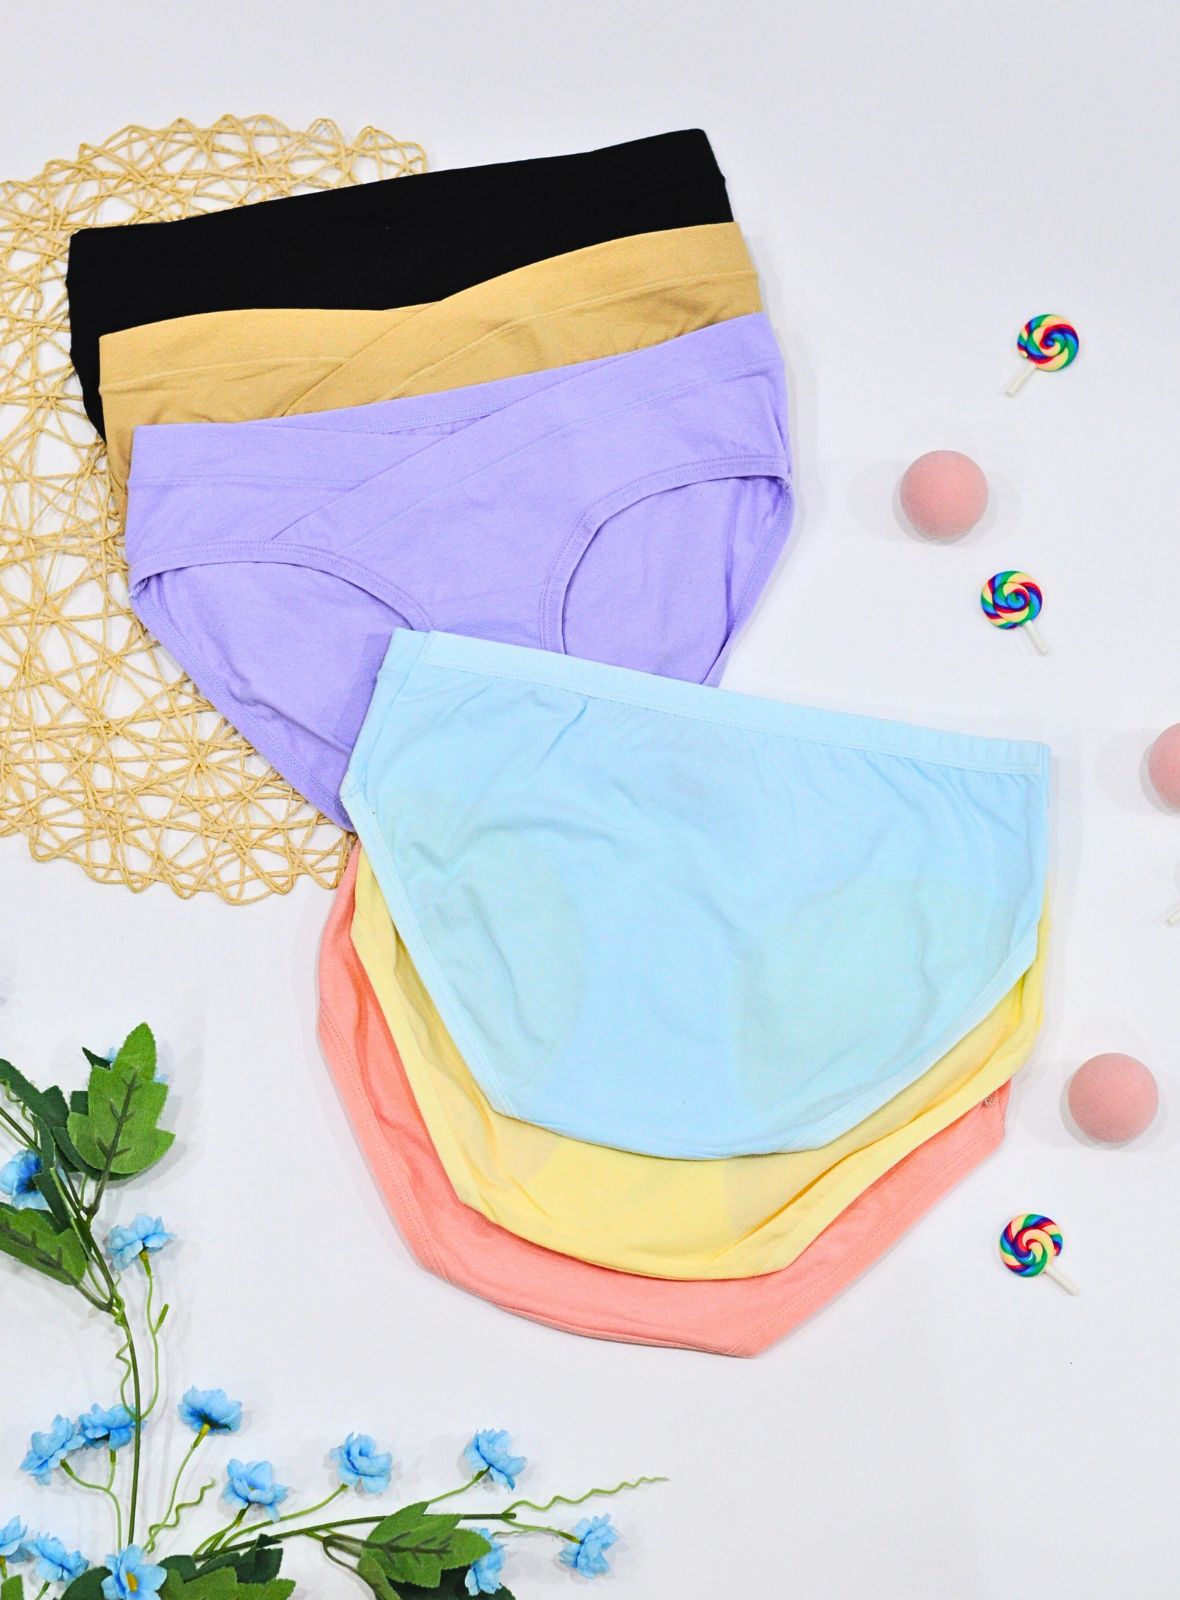 6 Pack Elena Maternity U-Shaped Briefs Cotton Panties